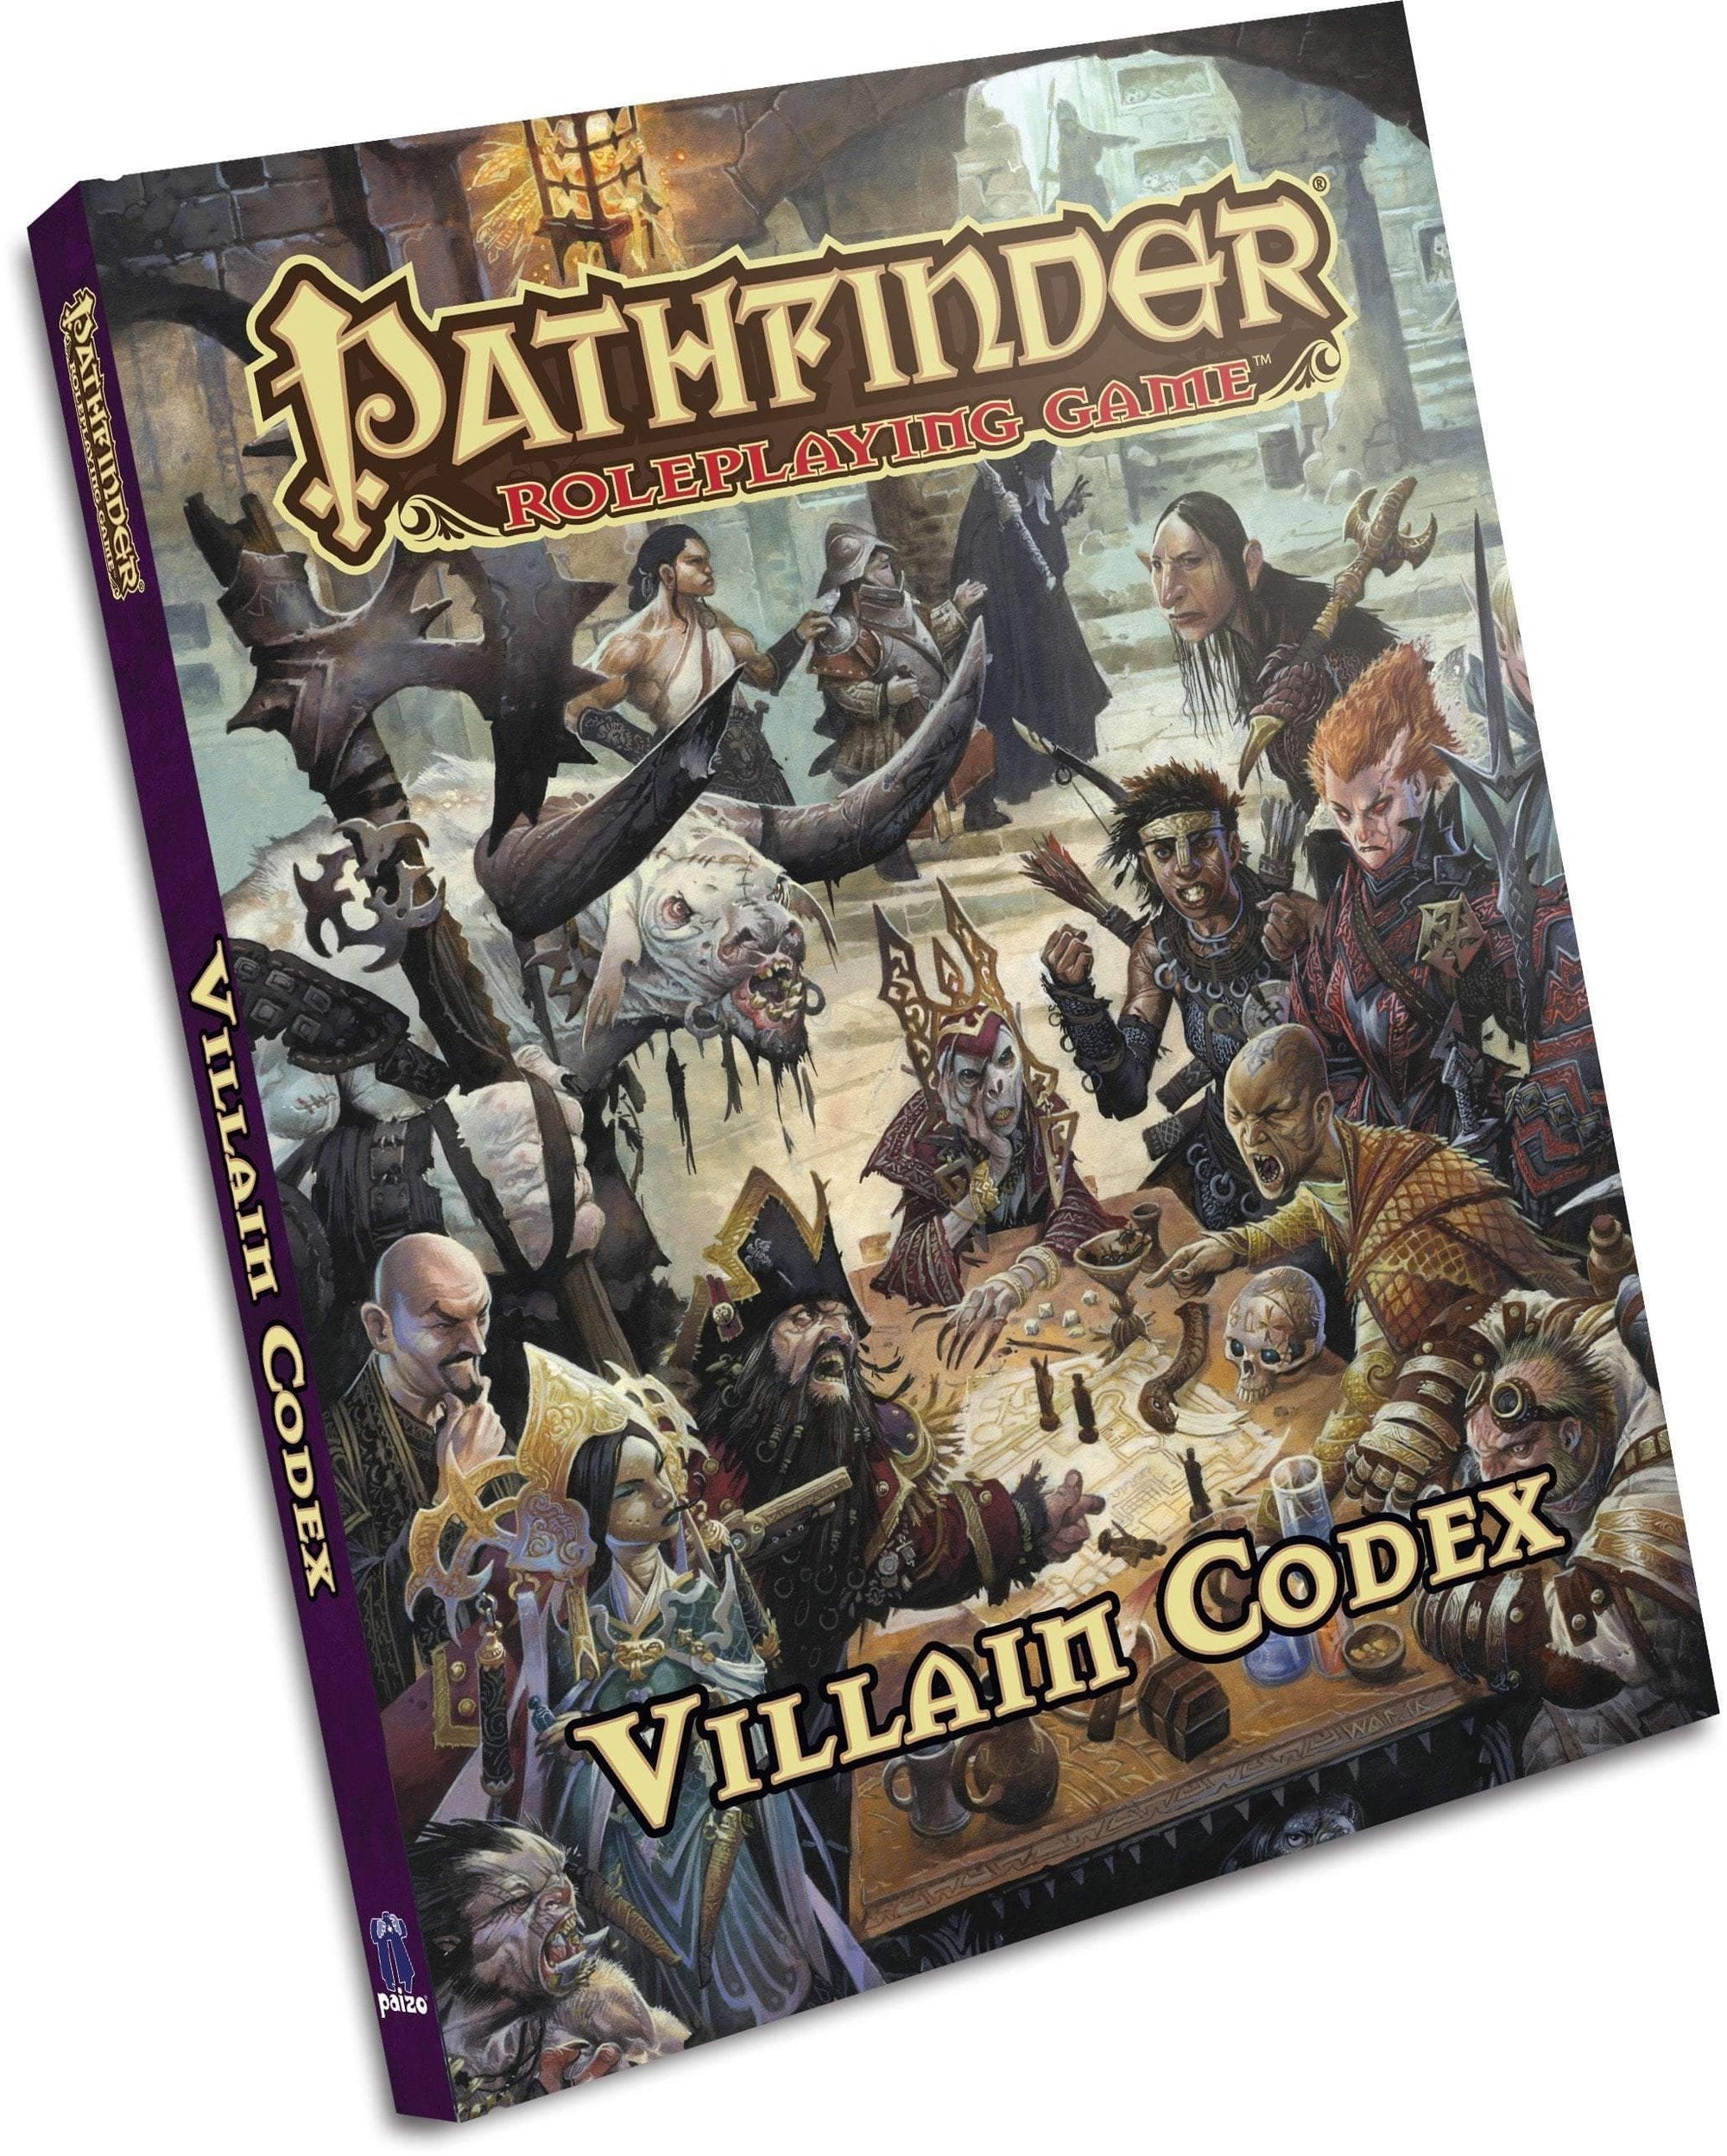 Pathfinder: Villain Codex Retail Rap Playing Game the Game Steward